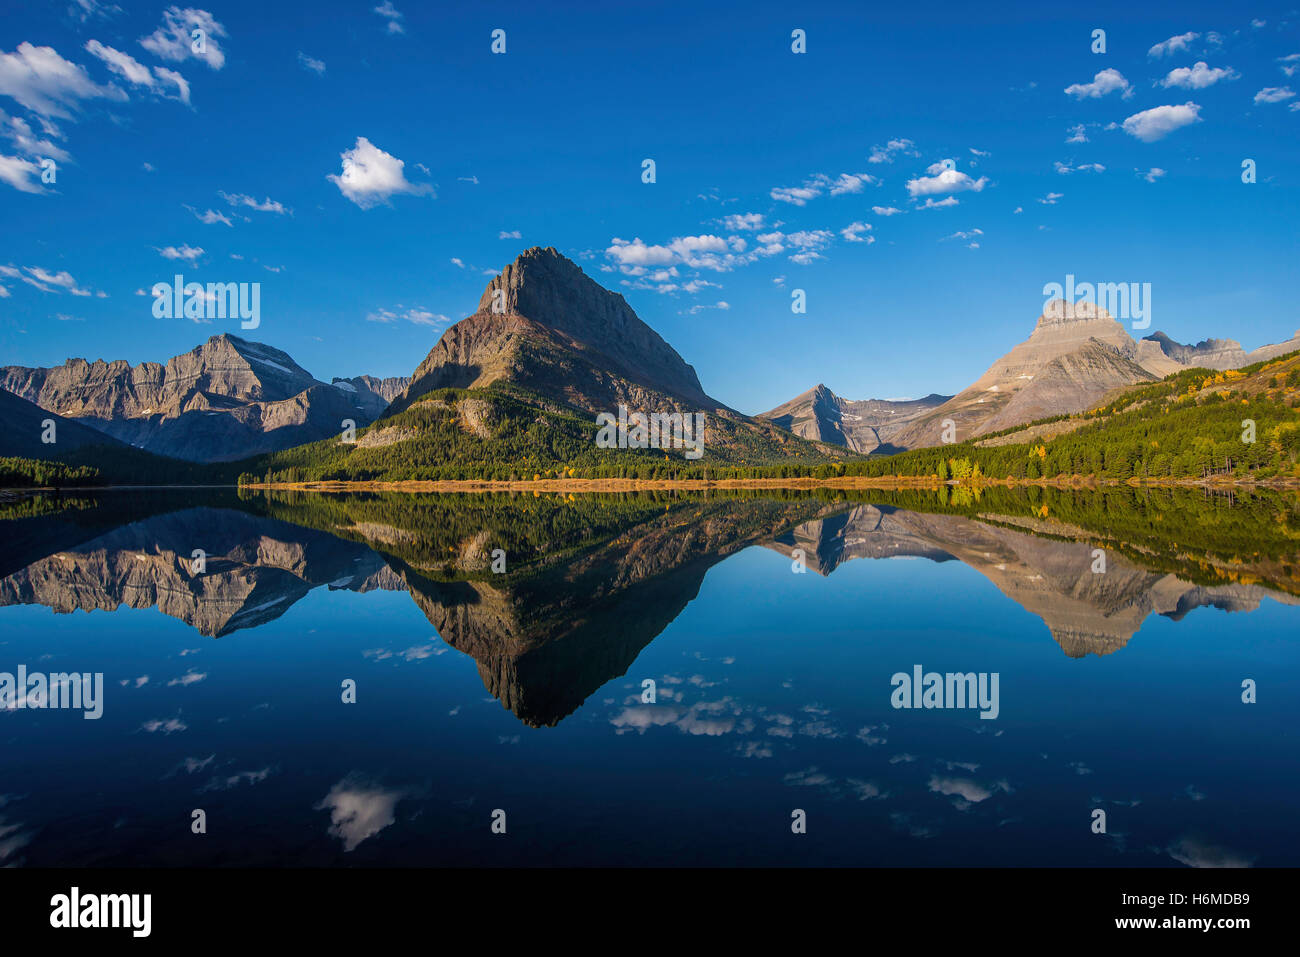 Reflection of Mt Wilbur, Swiftcurrent lake, Many Glacier region, Glacier National Park, Montana, USA Stock Photo